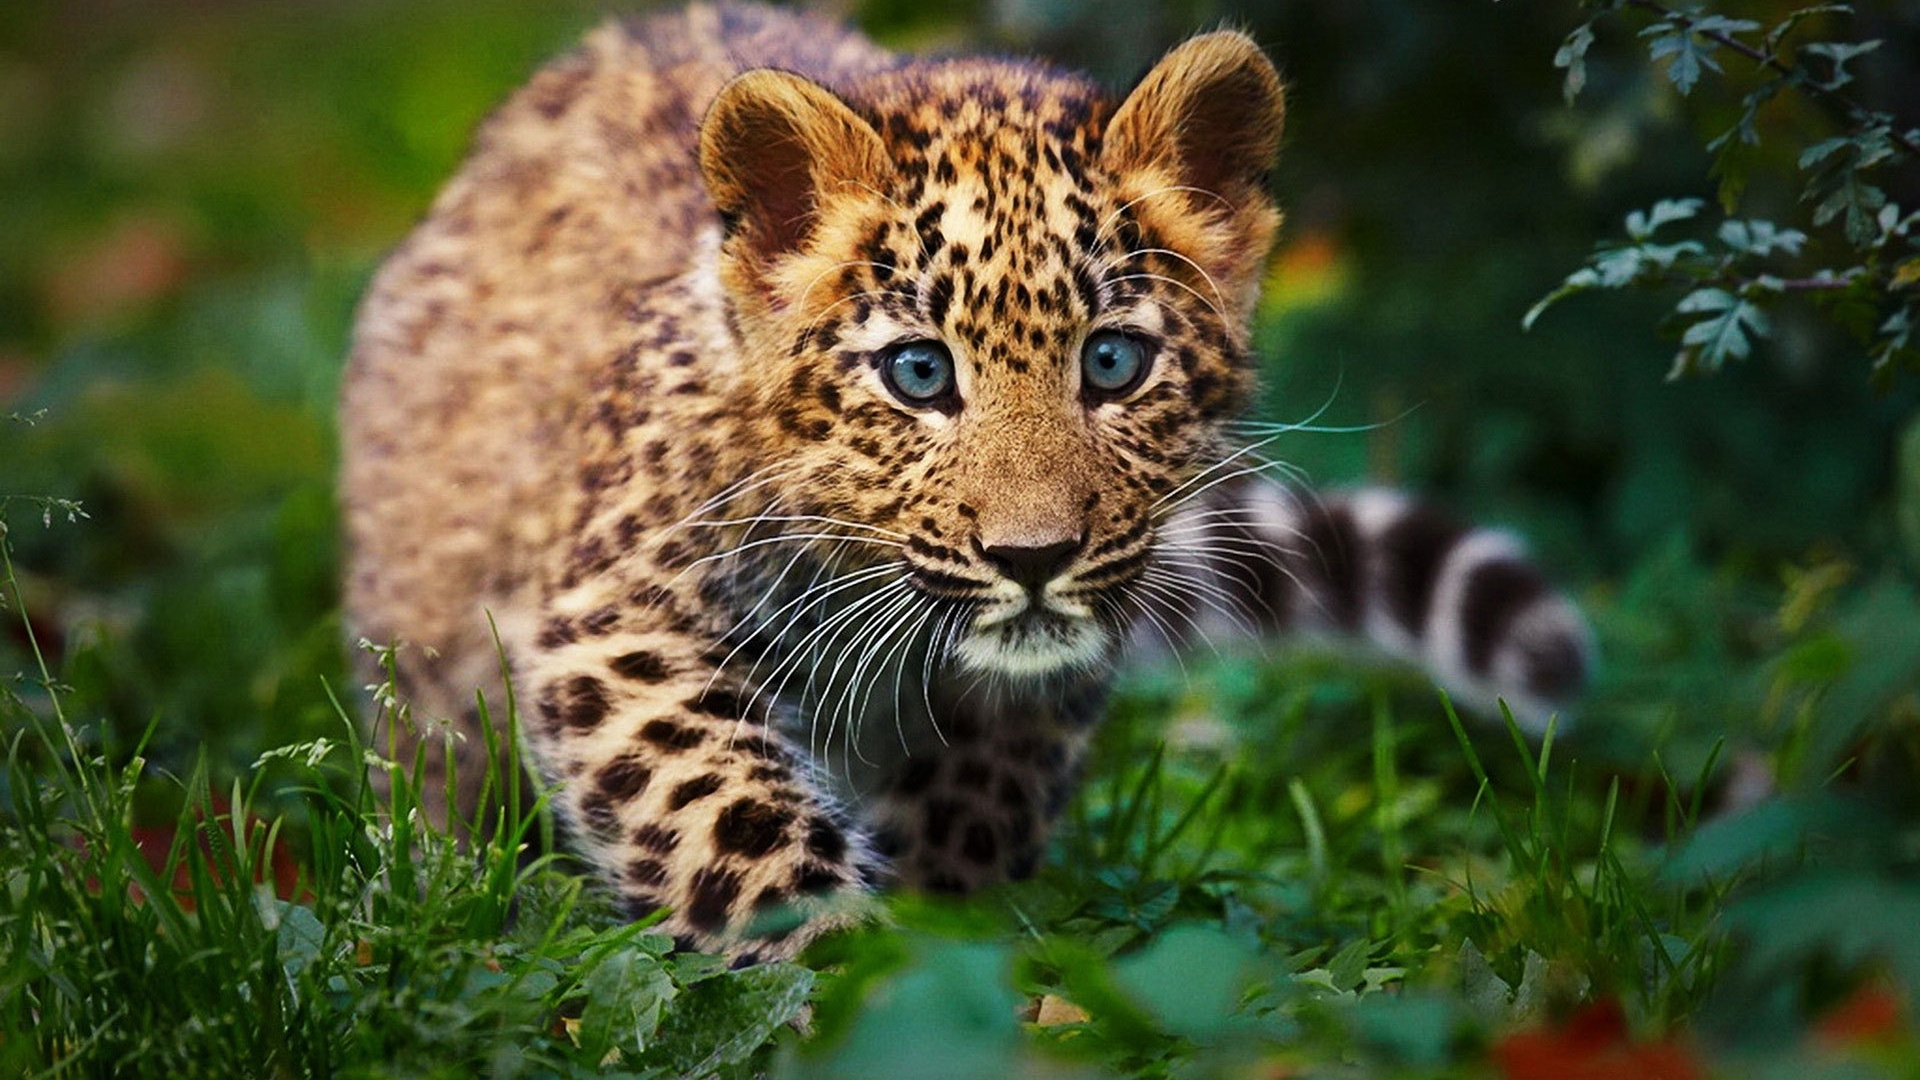 Image: Leopard, cub, spot, predator, muzzle, grass